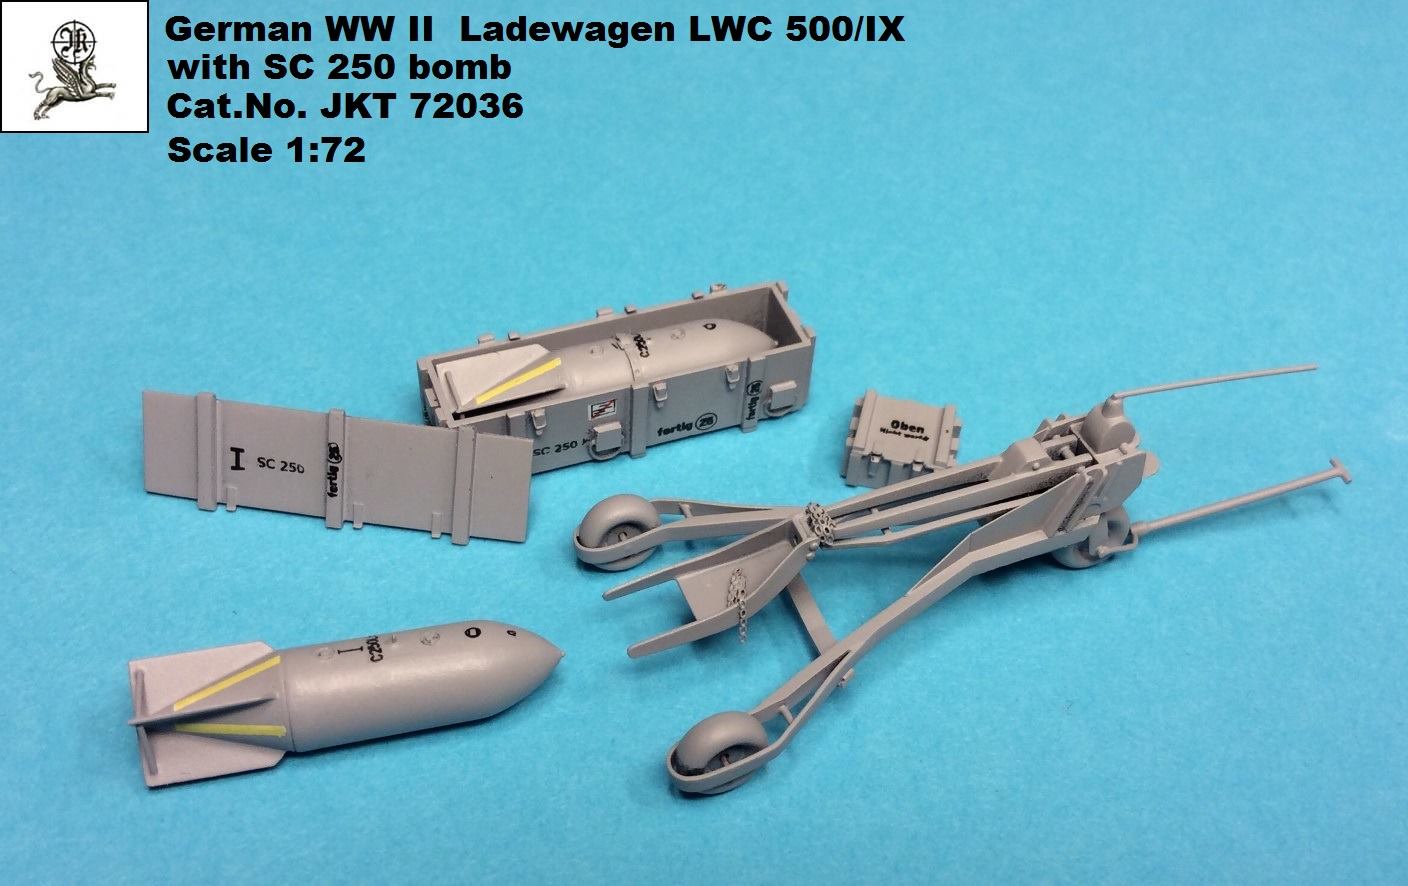 Luftwaffe Ladewagen LWC500/IX with SC 250 bombs